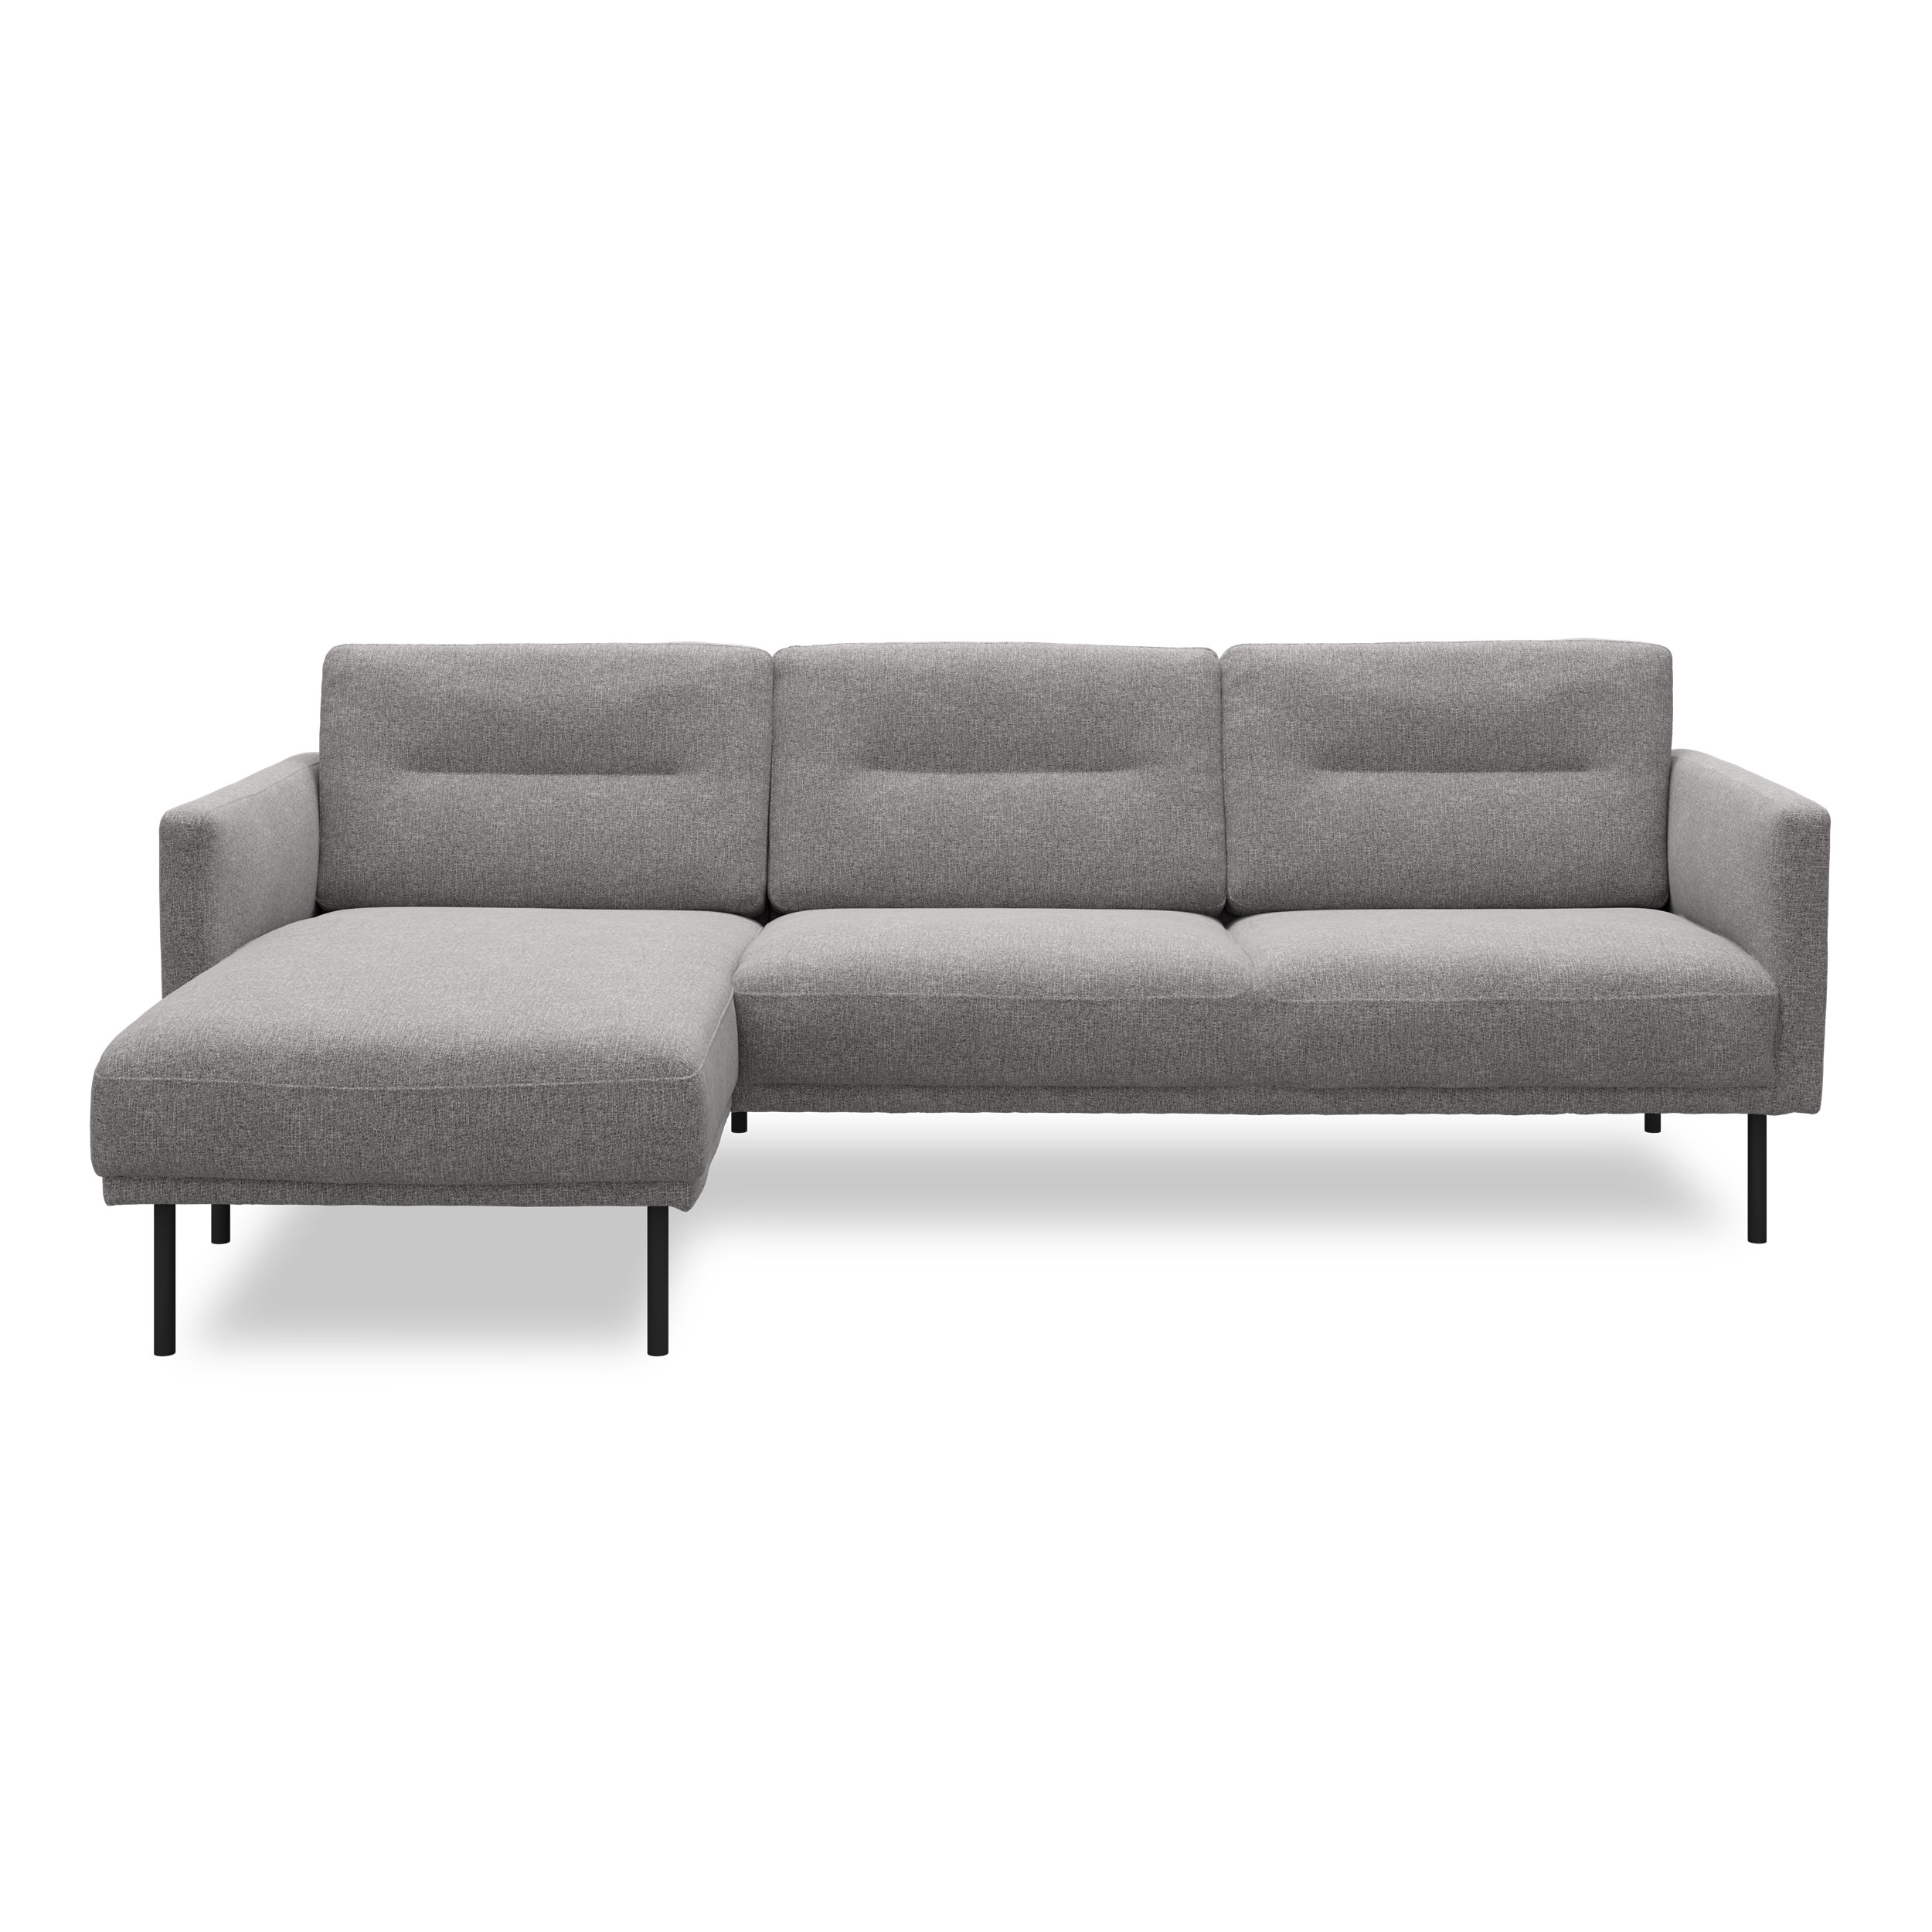 Larvik Sofa med chaiselong - Hampton 371 Grey stof og ben i sortlakeret metal